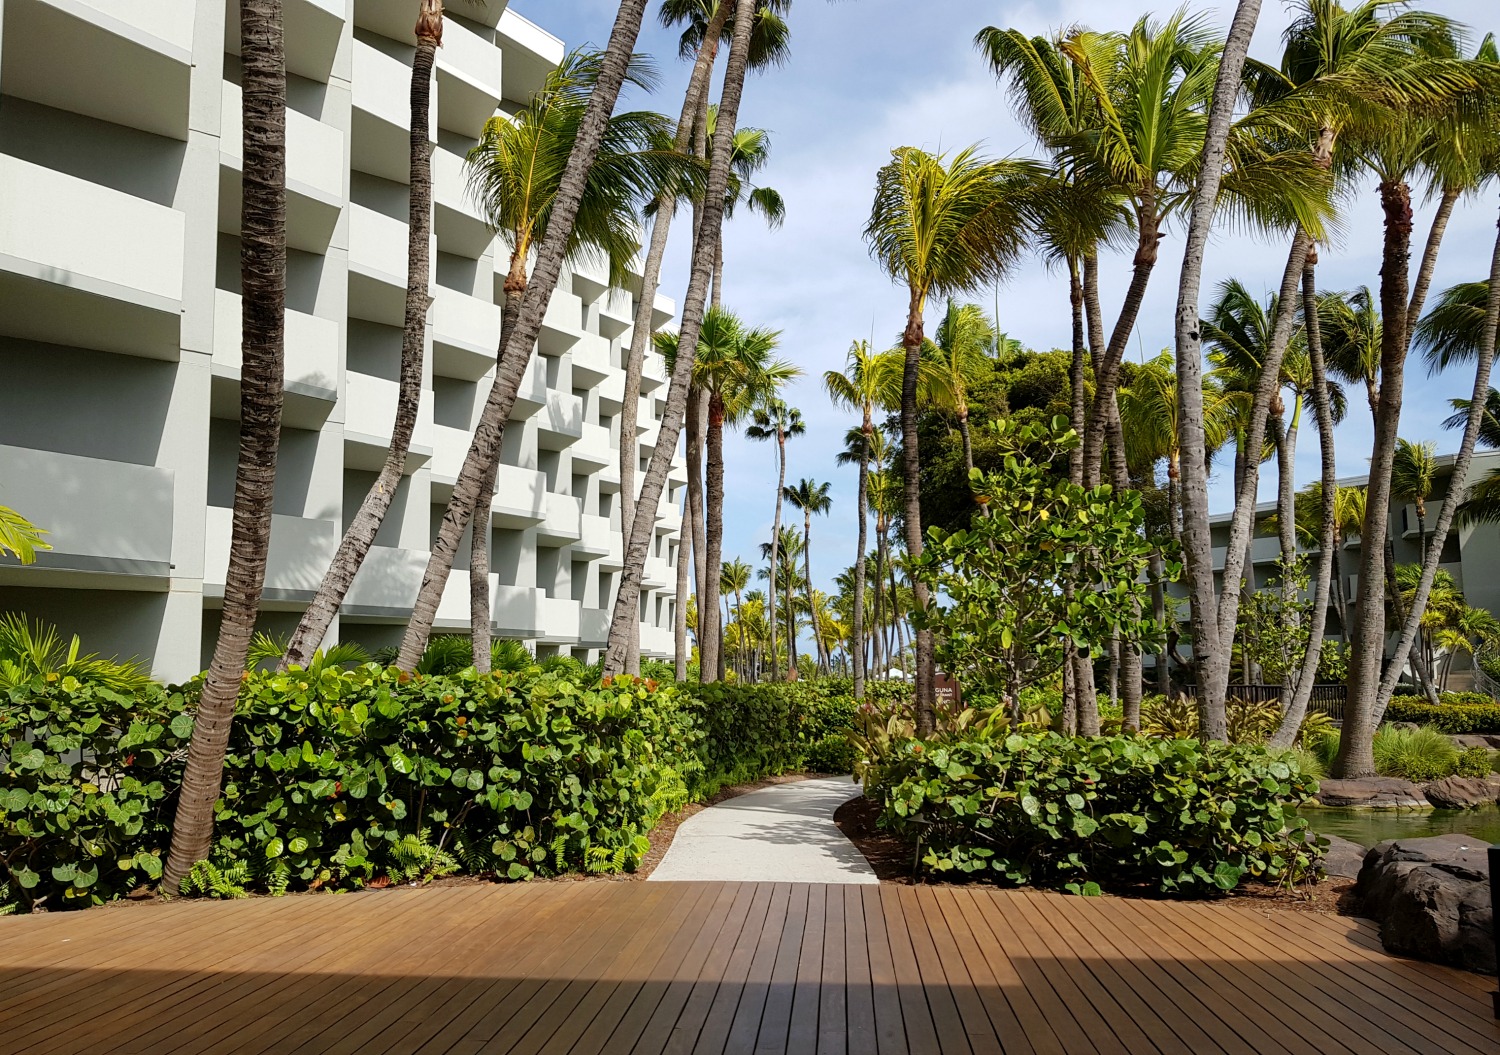 A view through the paths at the Hilton Aruba under the palm trees